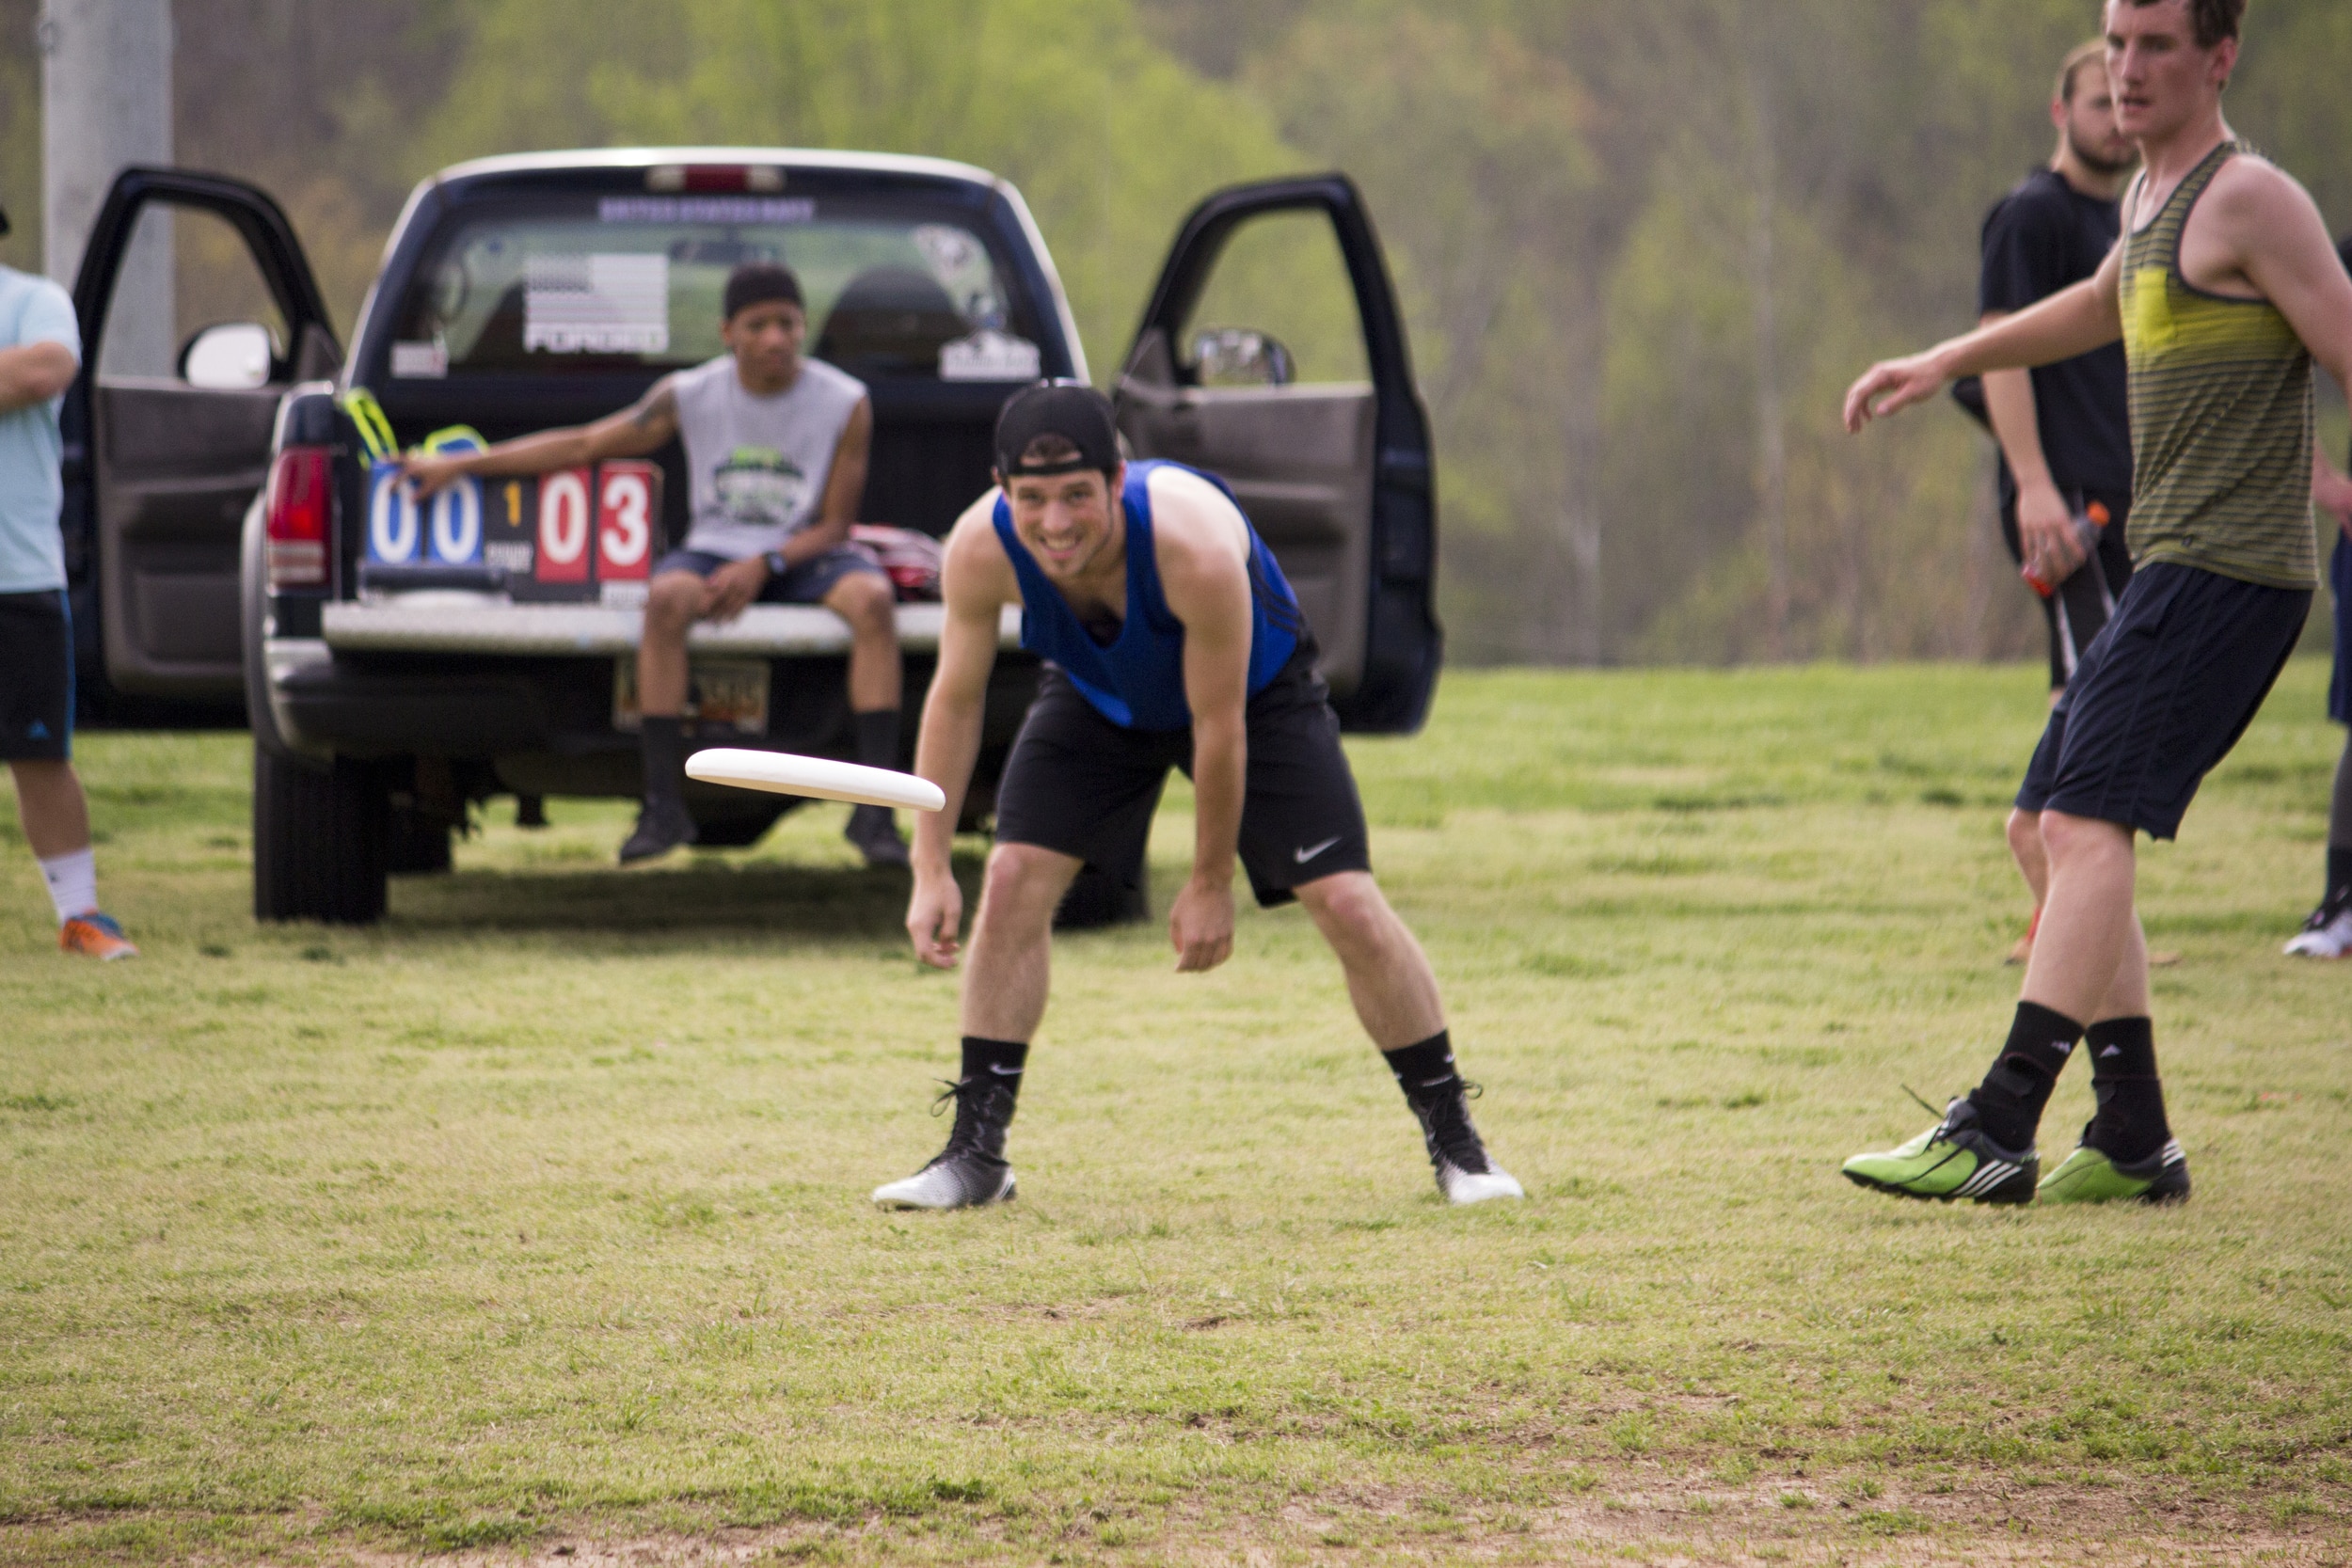  Daniel Shamblin watches his released frisbee as his teammate runs to catch it.&nbsp; 